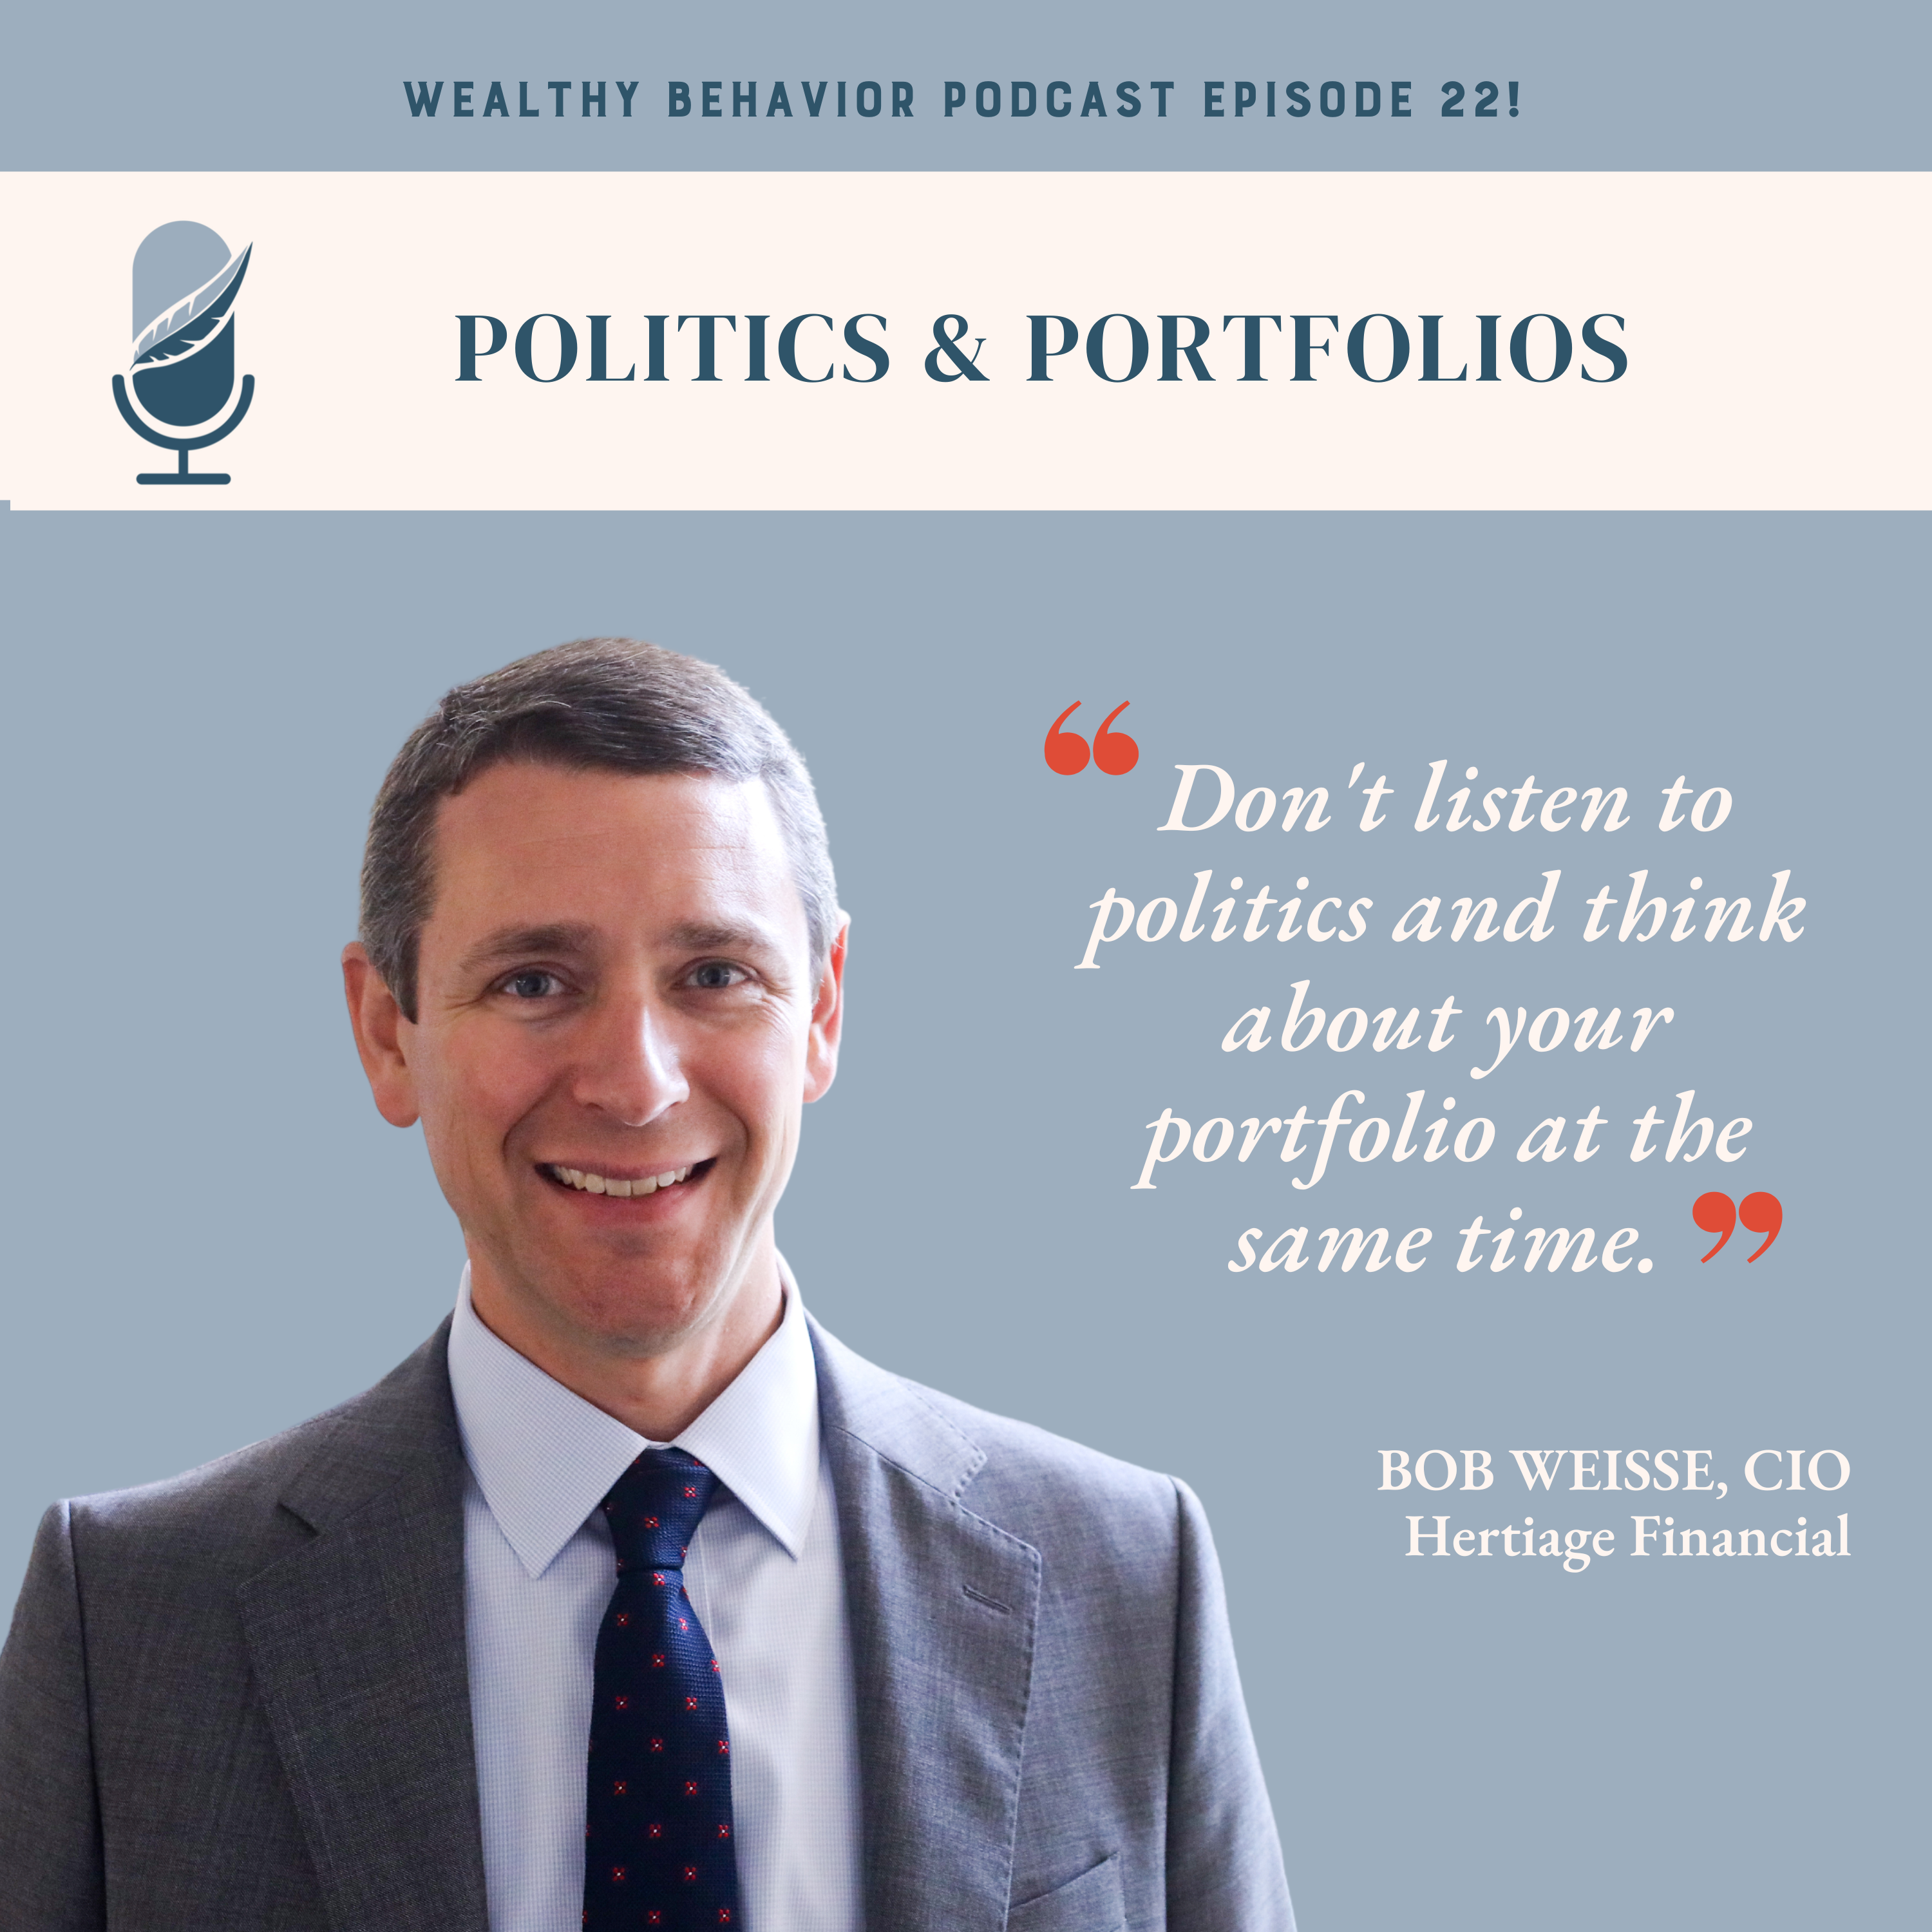 Wealthy Behavior Podcast: Politics & Portfolios